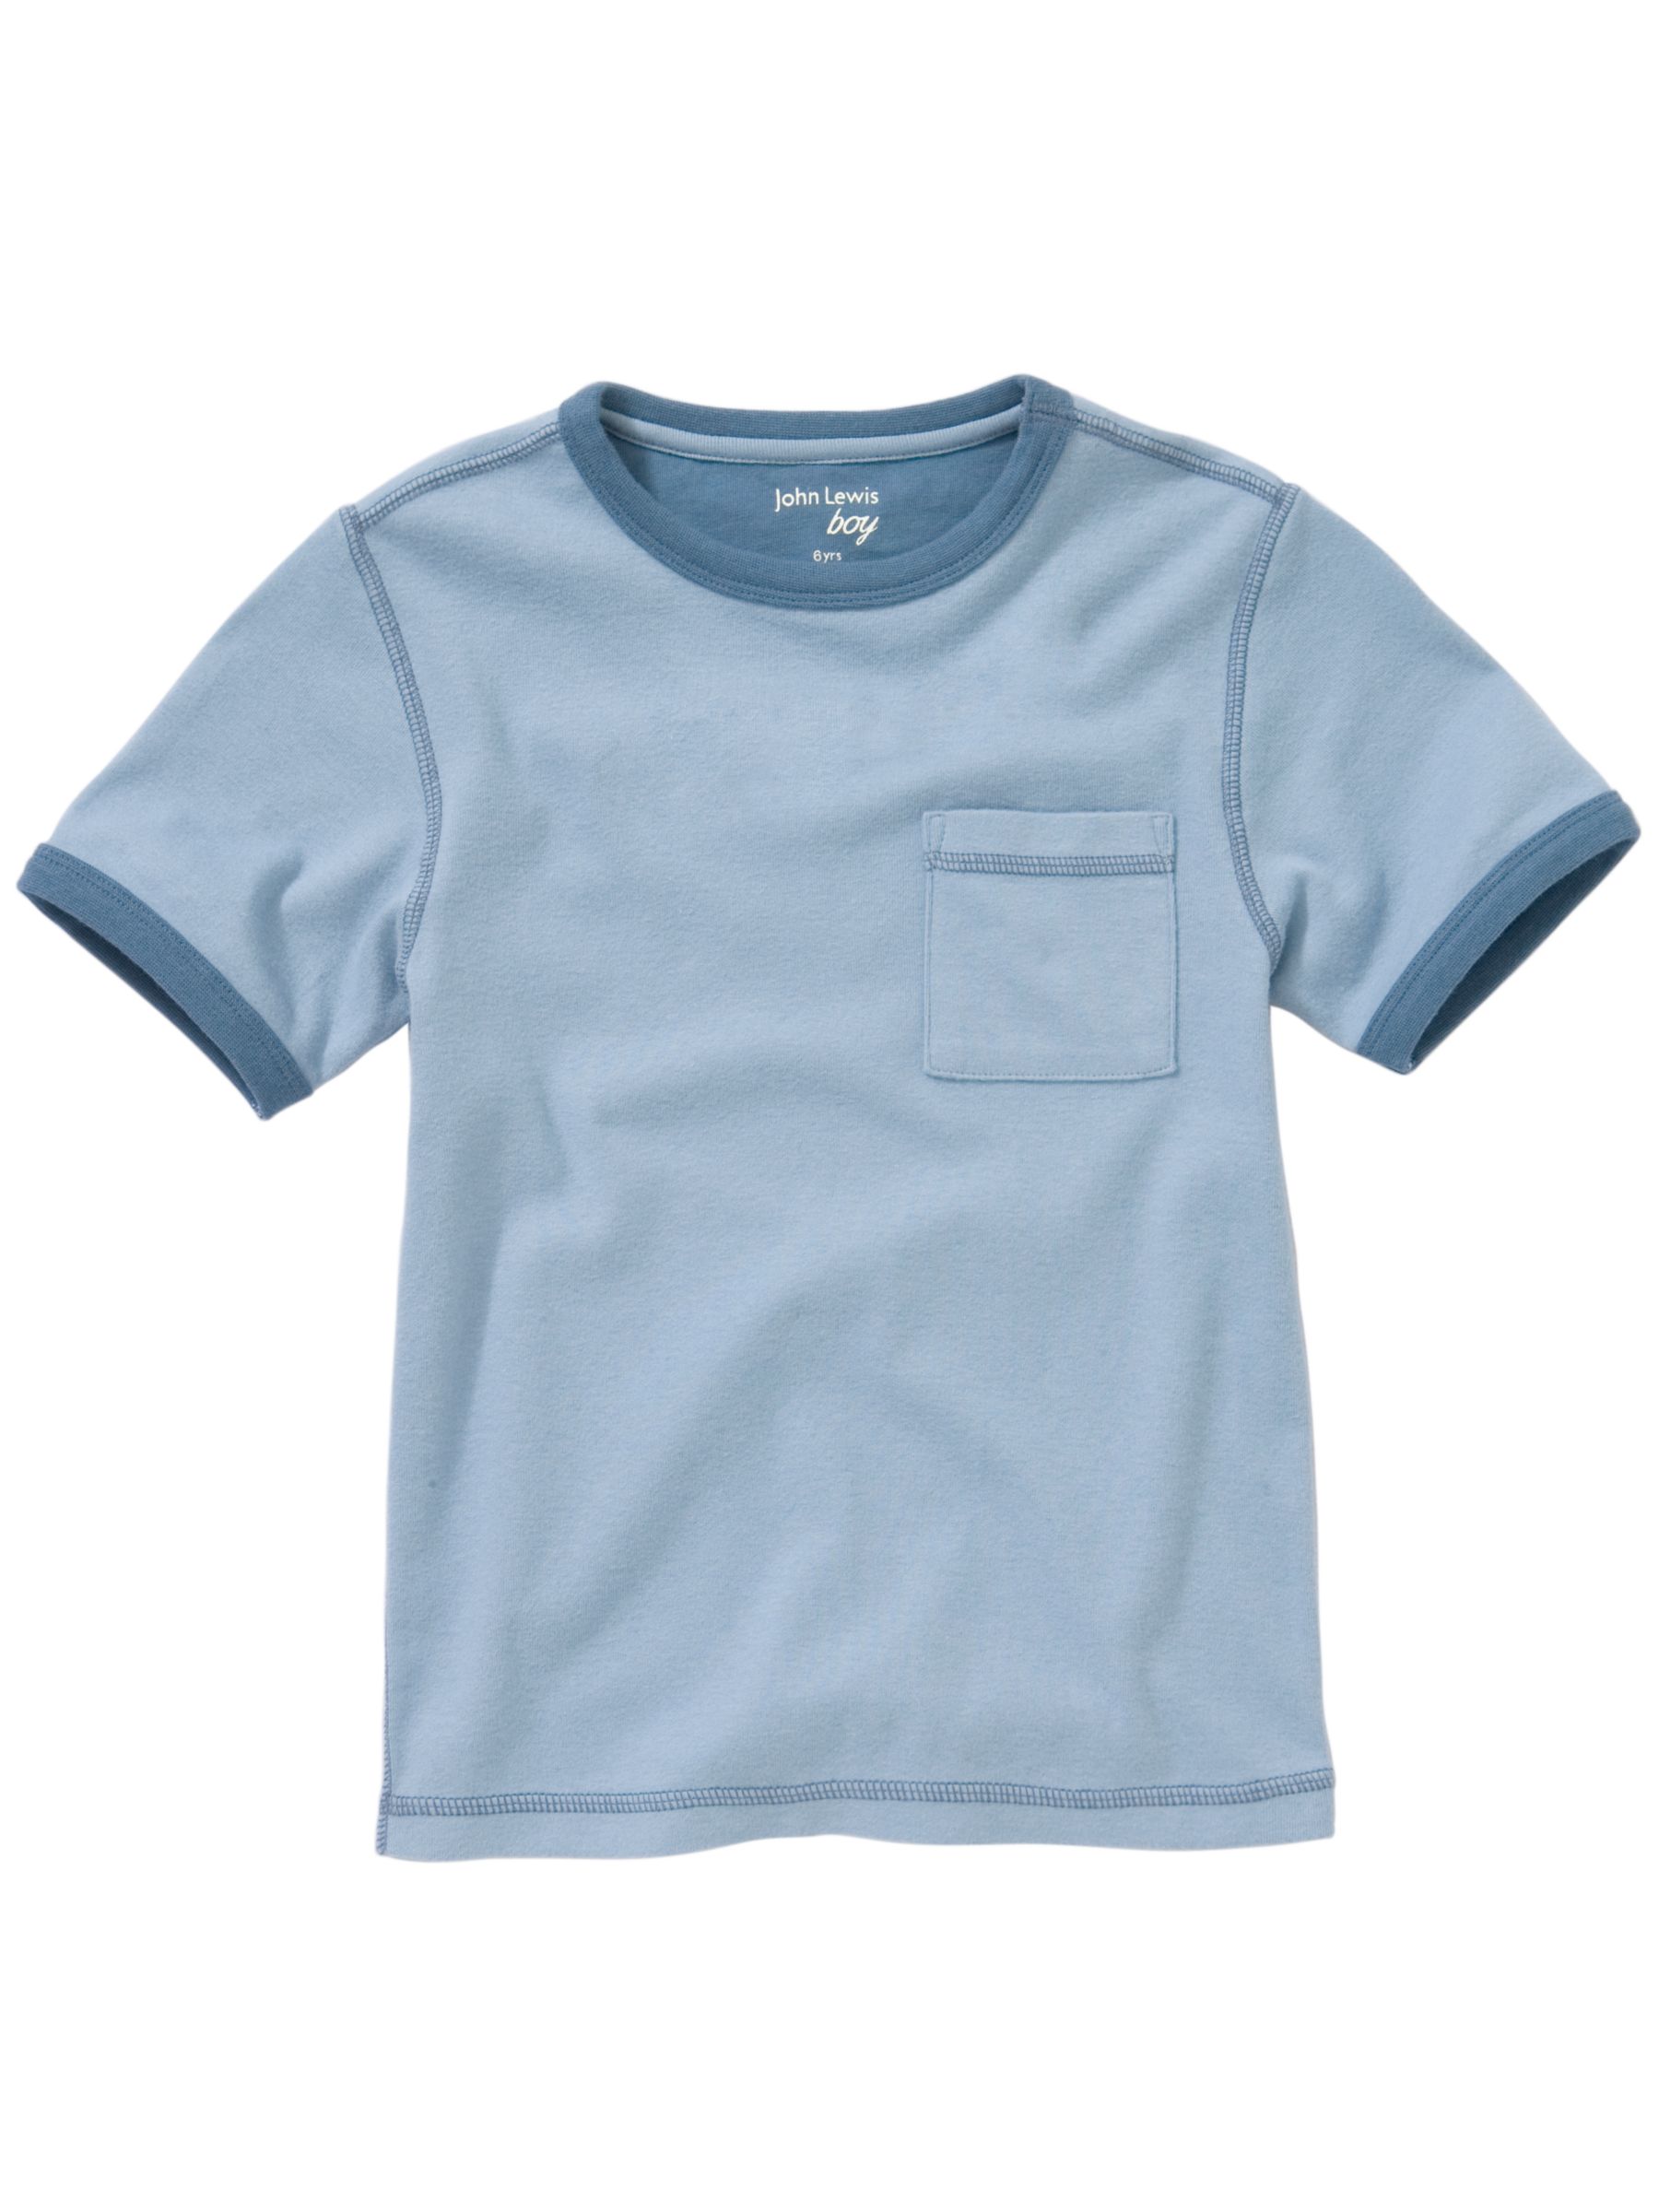 John Lewis Boy Short Sleeve T-Shirt, Blue, 3 years